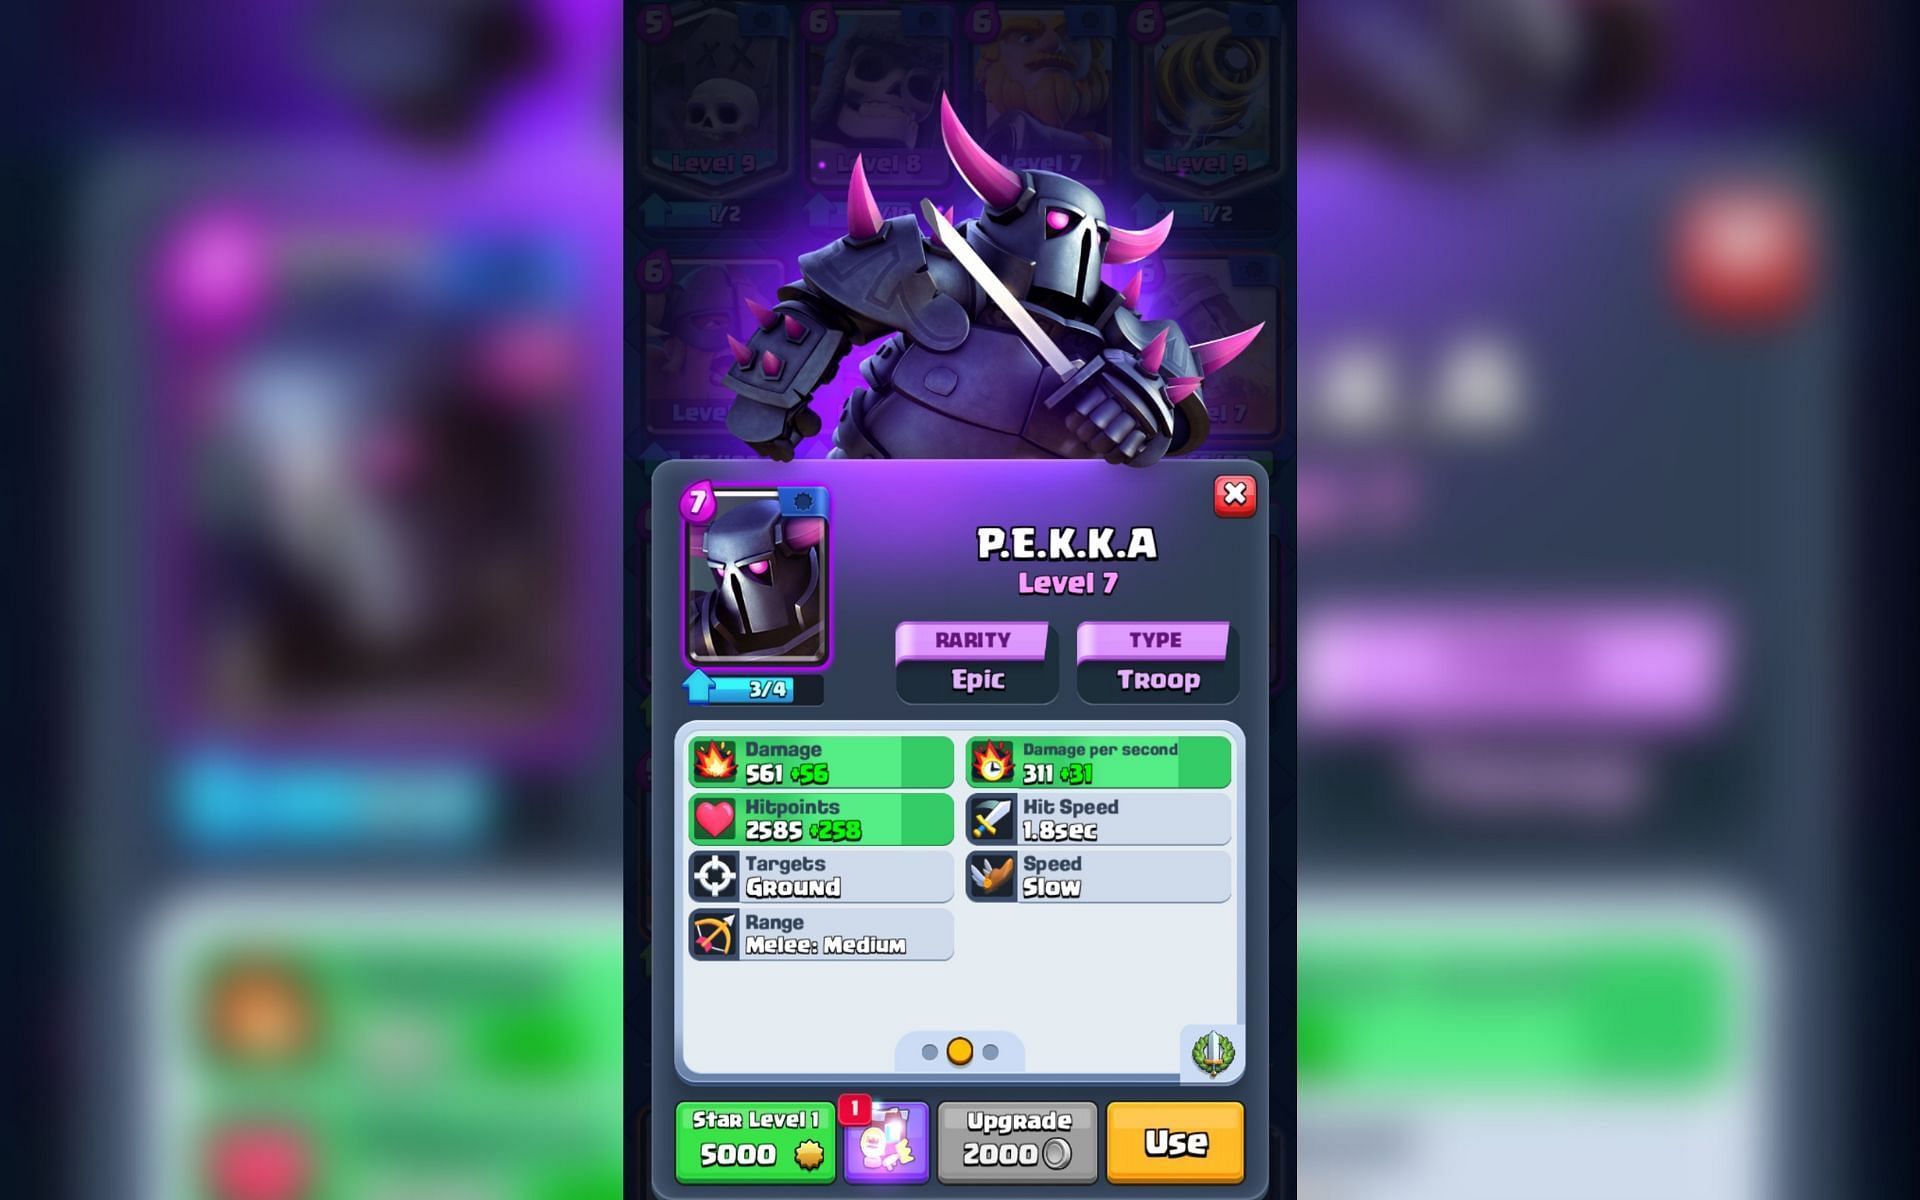 Pekka is a powerful Epic card (Image via Sportskeeda)